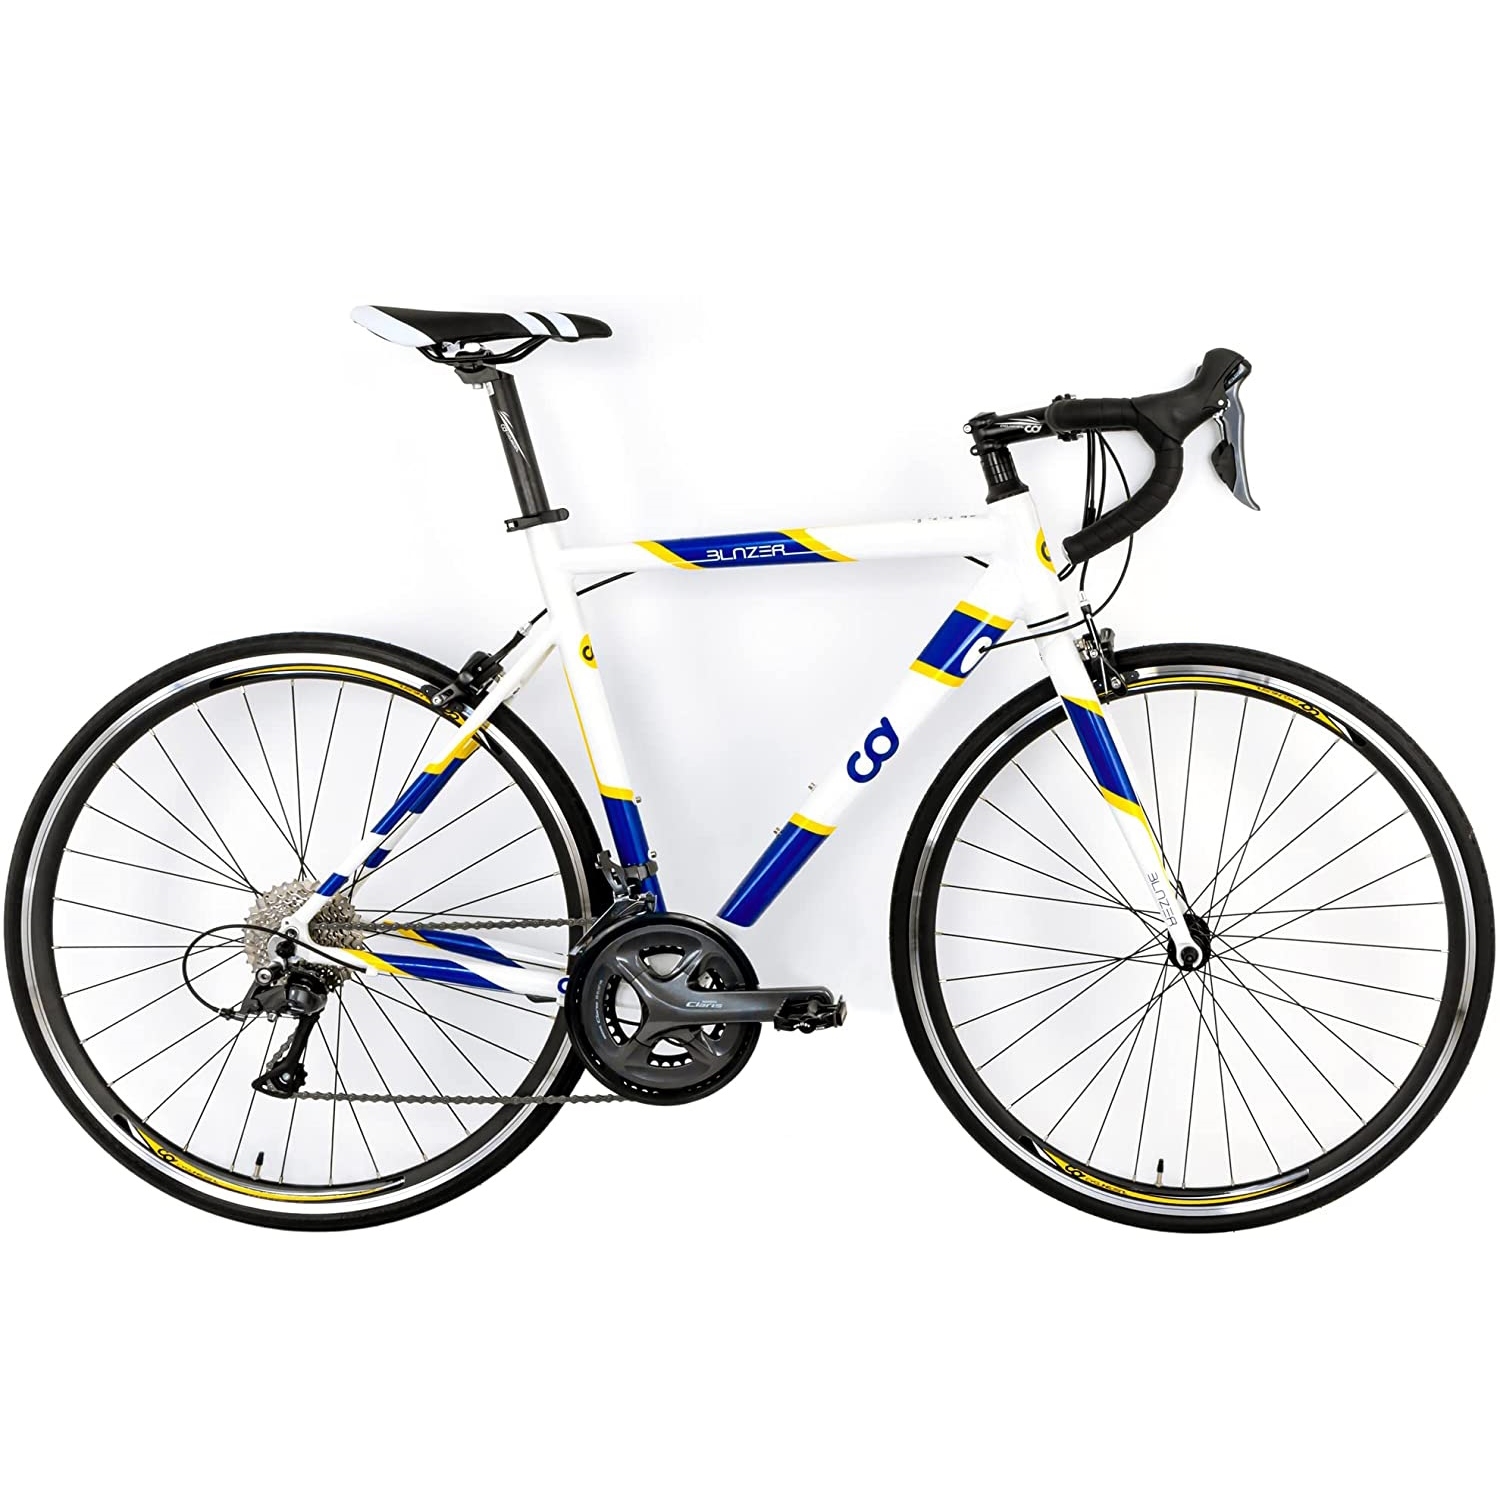 CyclingDeal Blazer Shimano Claris 16 Speed Road Bike – Quality Aluminium Frame with 700c Wheels